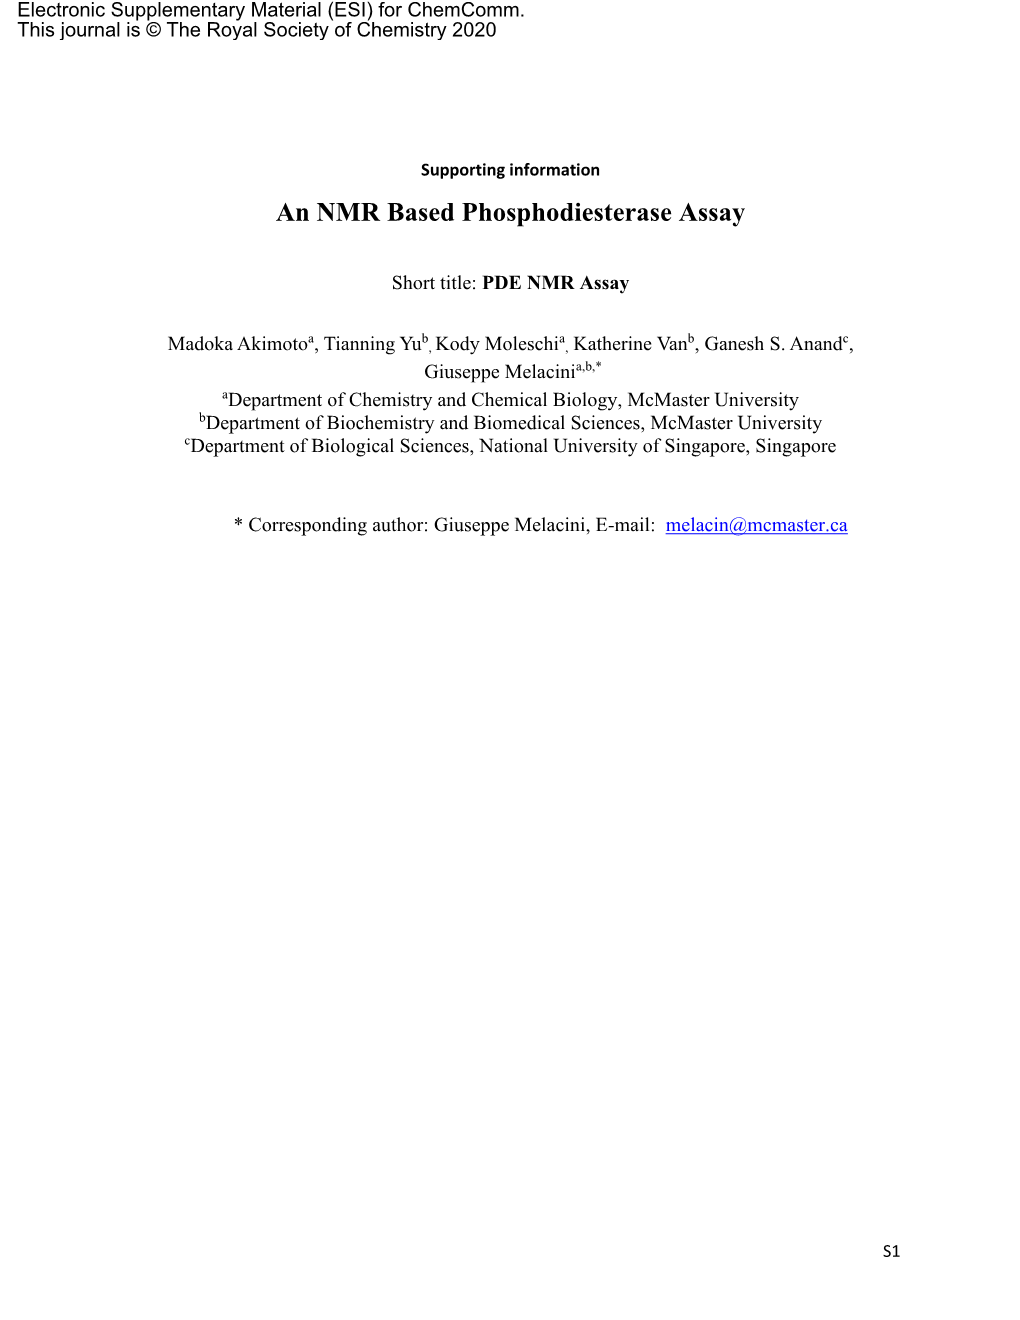 An NMR Based Phosphodiesterase Assay